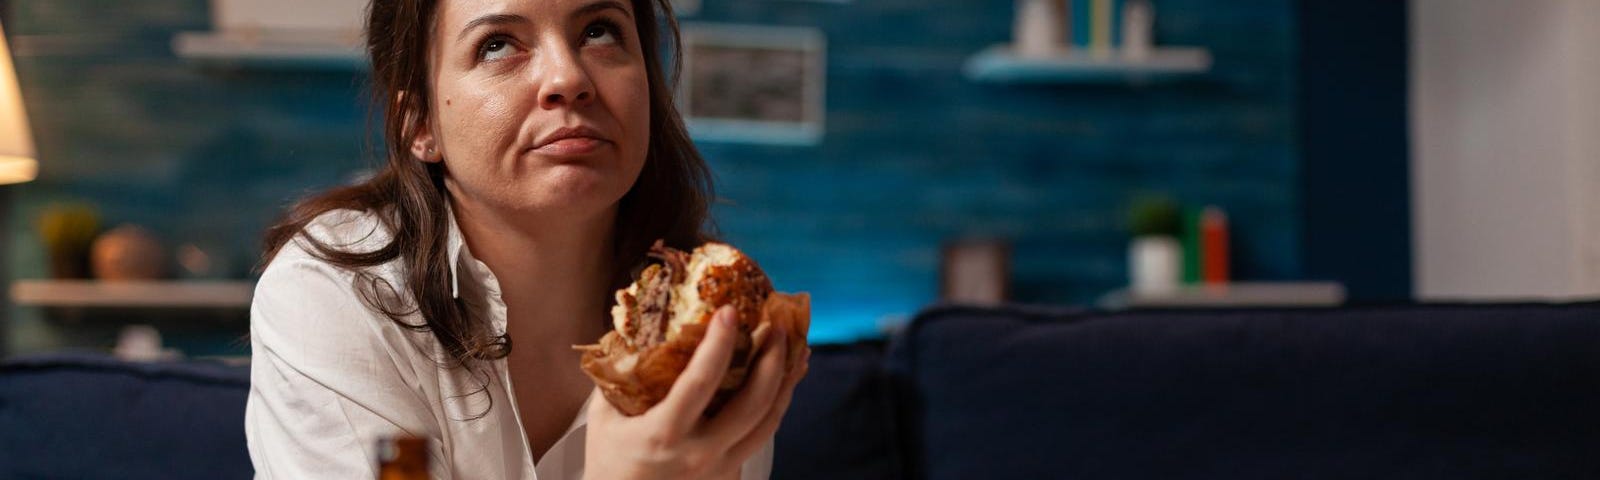 A woman eating a burger.